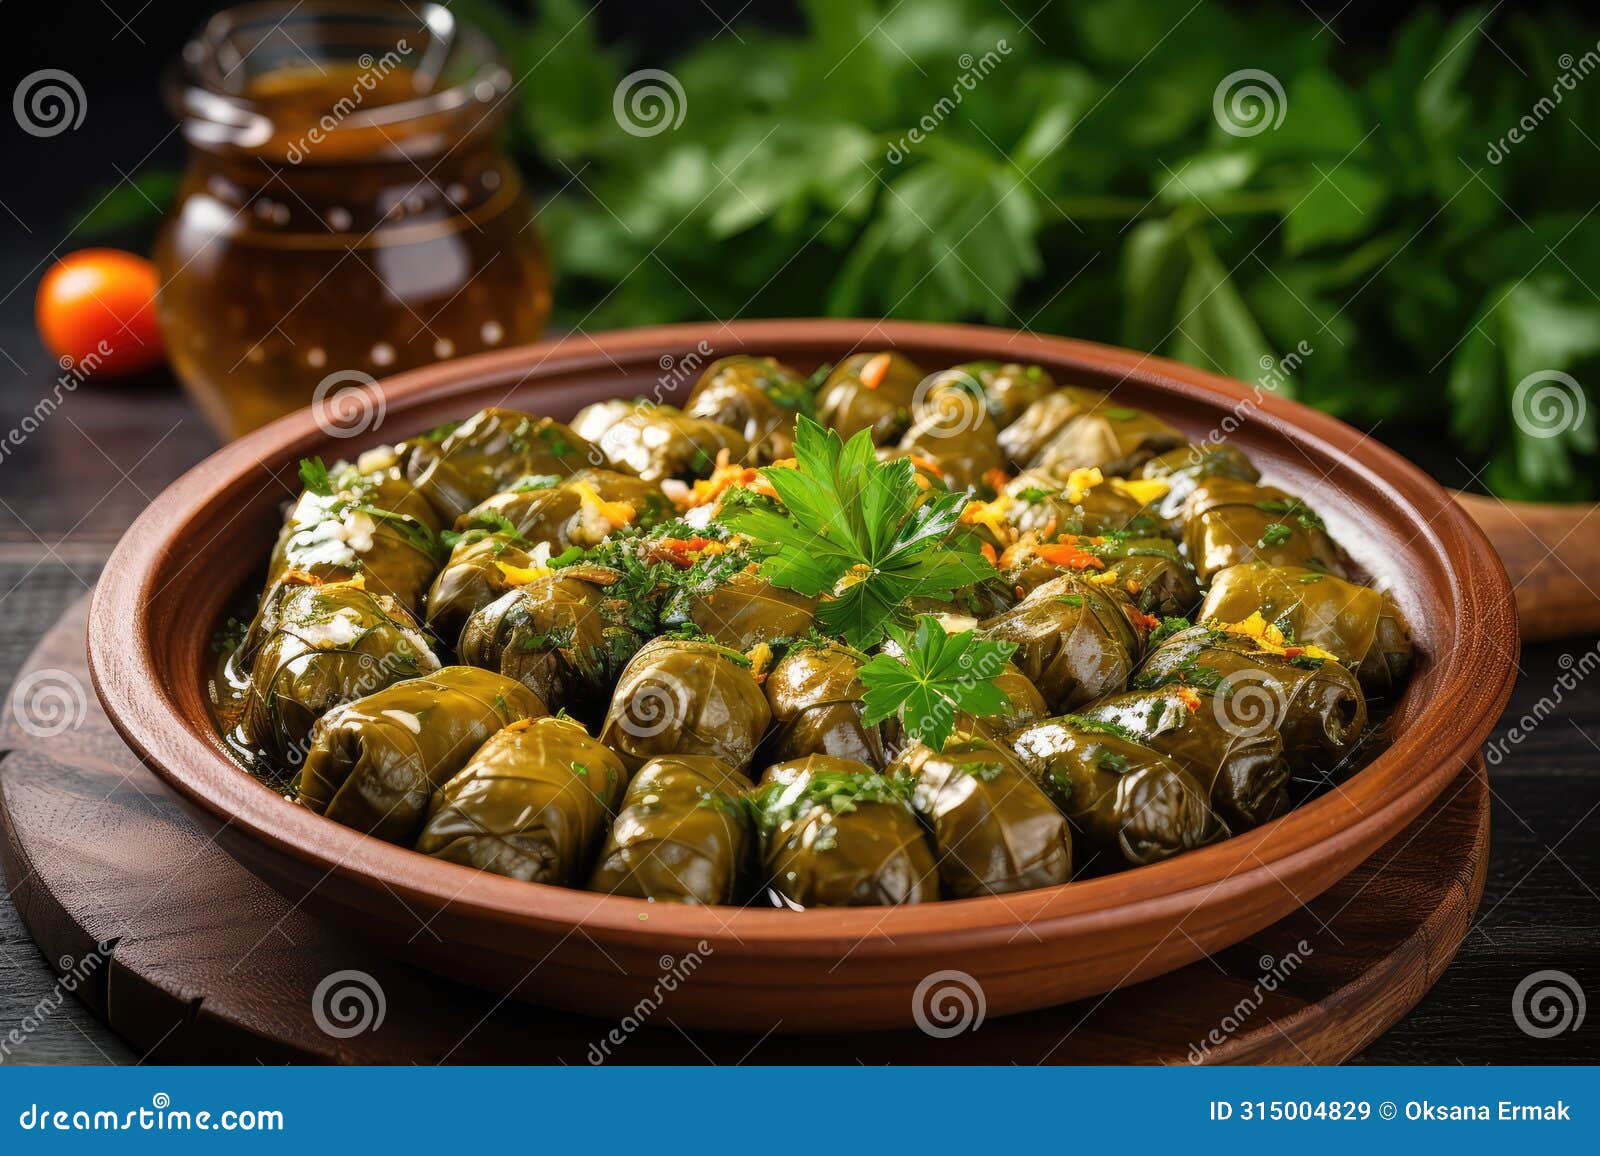 traditional turkish dolma, sarma or dolmades on wooden plate, mediterranean dish dolmadakia